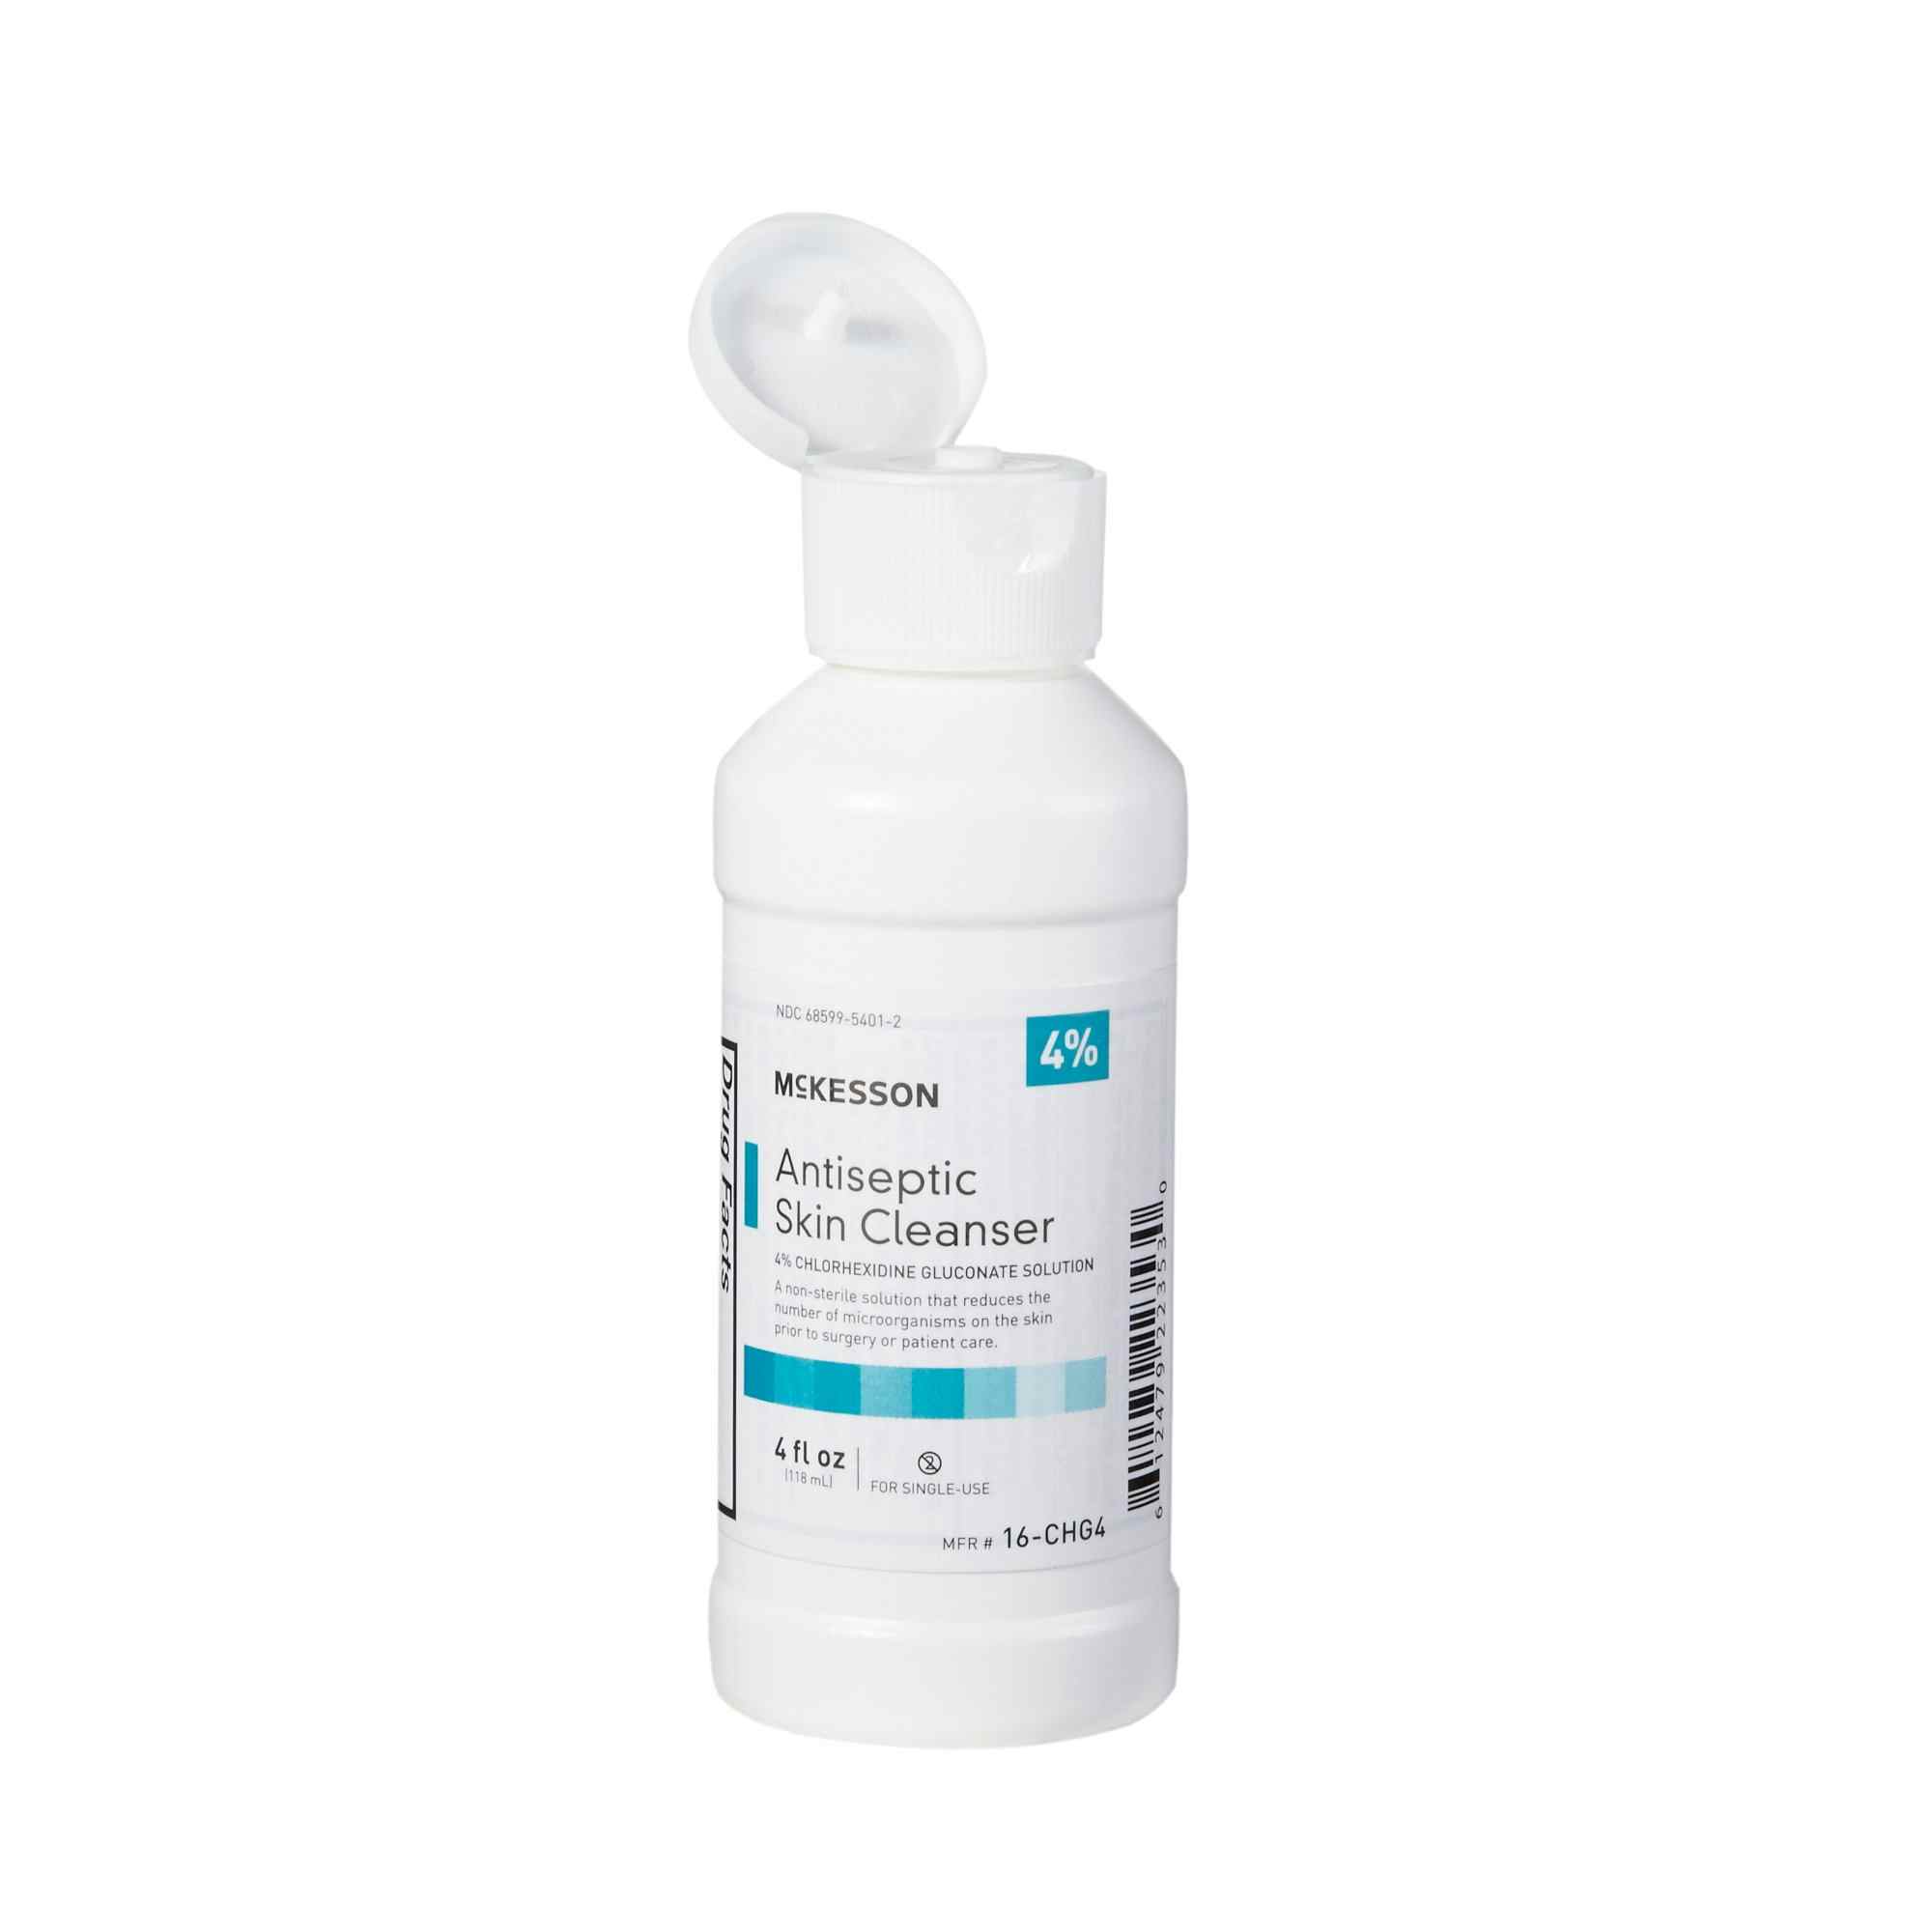 McKesson Antiseptic Skin Cleanser, 16-CHG4, 4 oz. - 1 Each